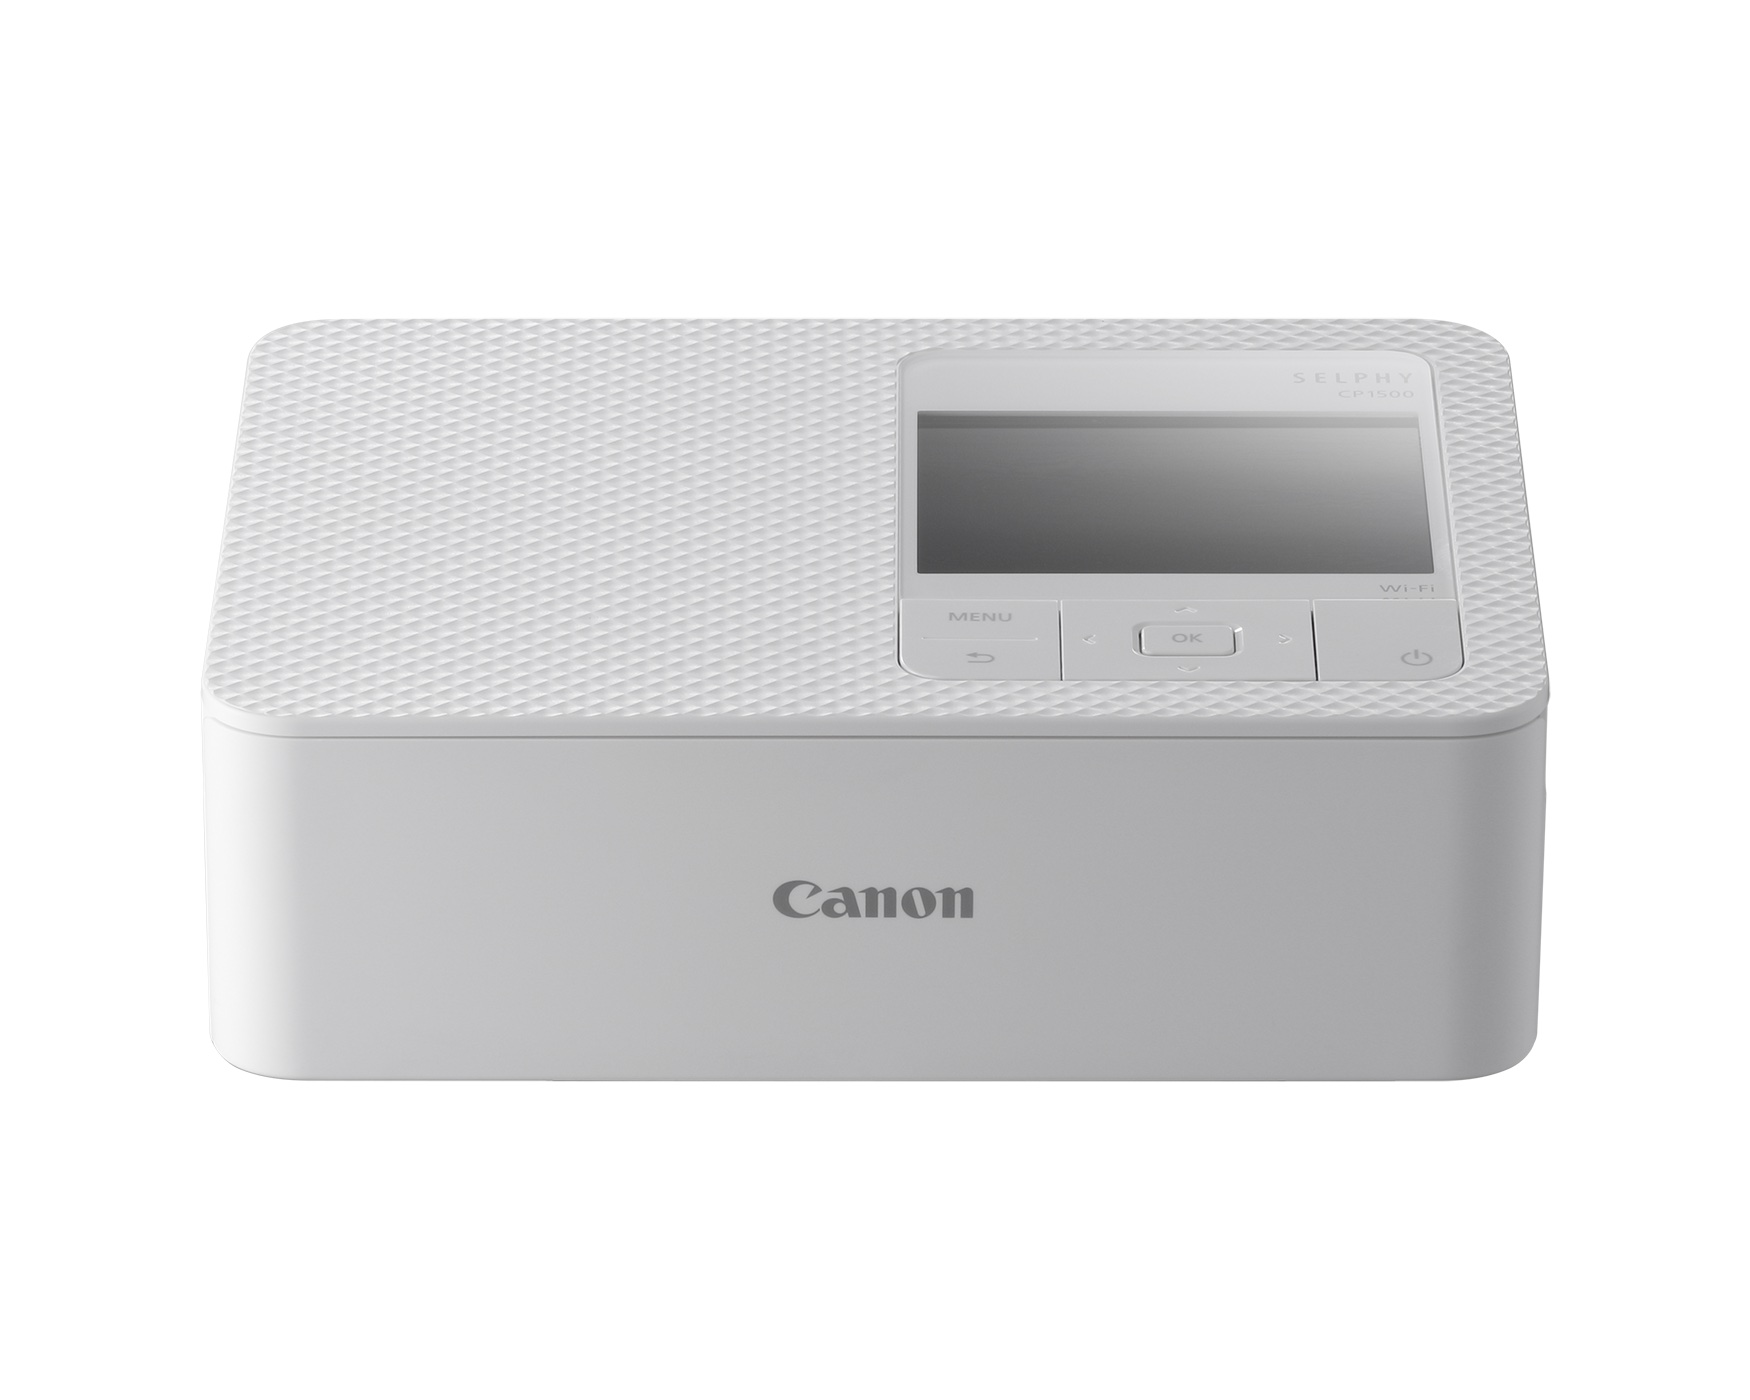 Canon Selphy 1500 photo printer white copy